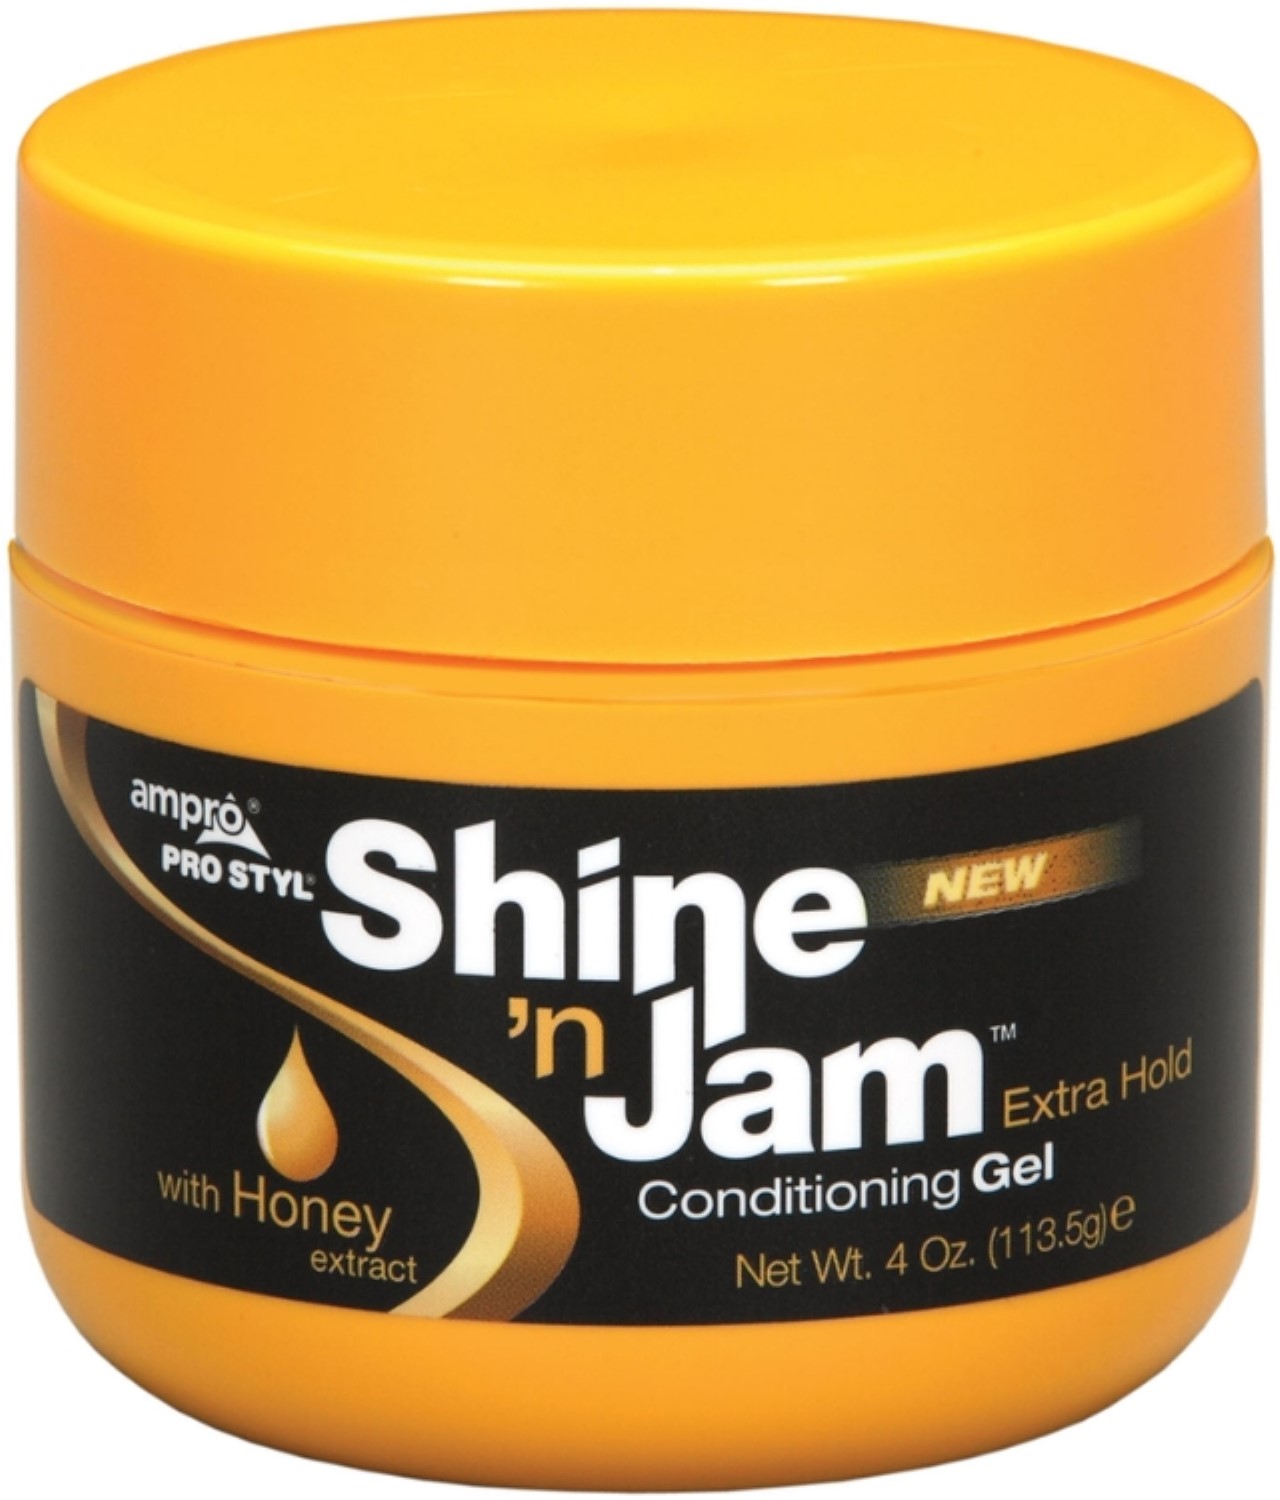 Ampro Shine N Jam Extra Hold Conditioning Styling & Braiding Gel, 4oz., Natural Hair, Moisturizing - image 1 of 4